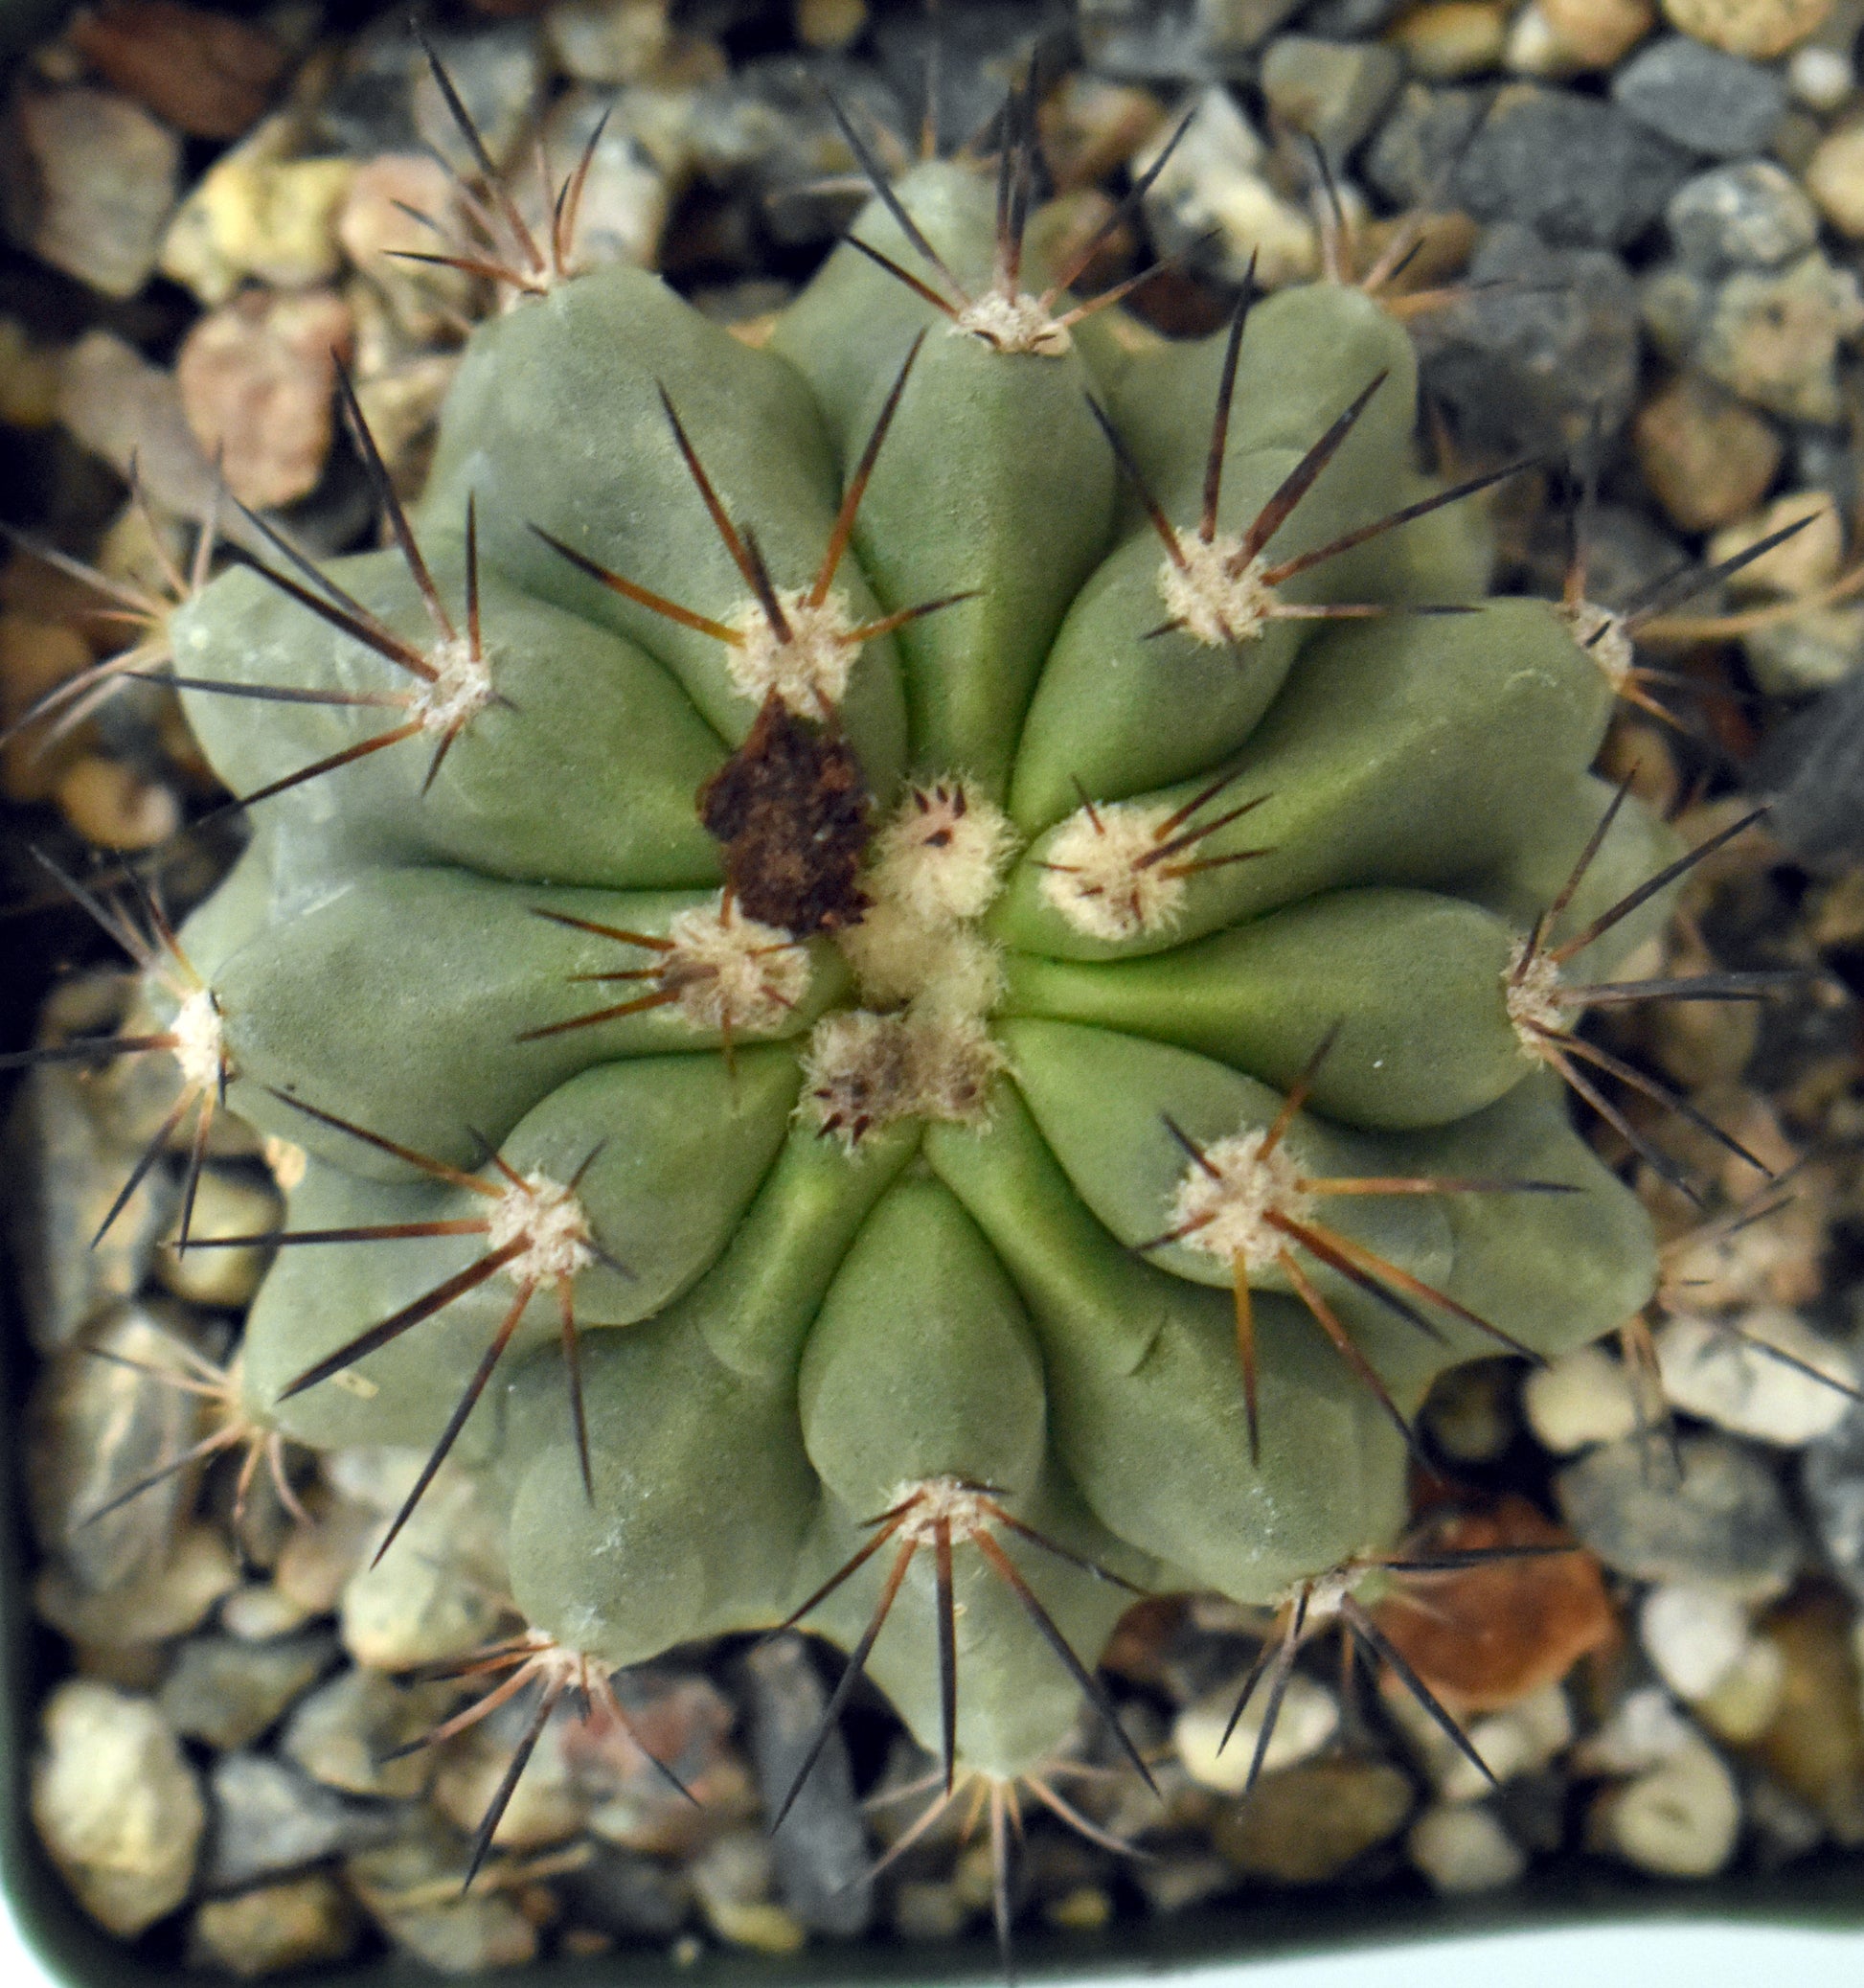 Copiapoa grandiflora Live Cactus in 4 Inch